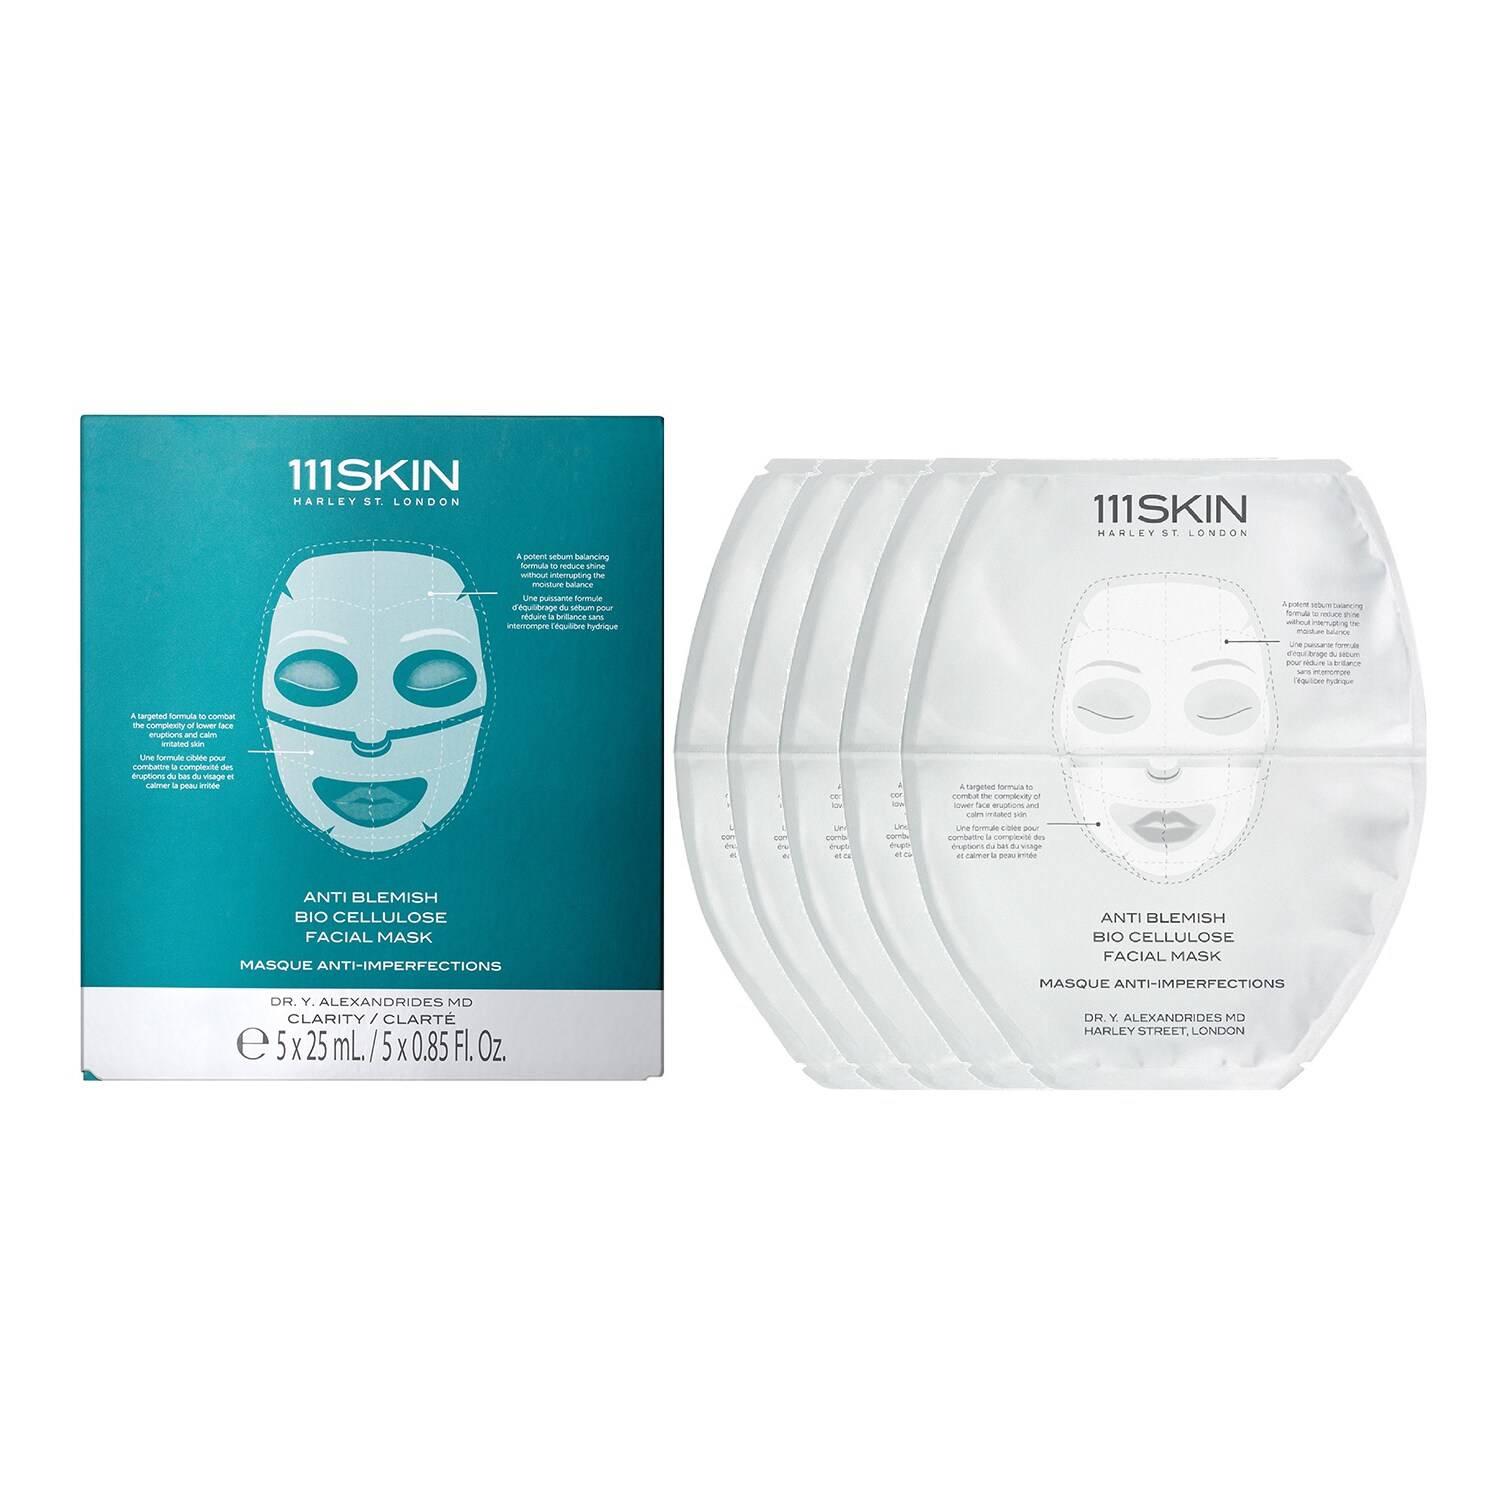 111Skin Anti Blemish Bio Cellulose Facial Mask 5 X 25Ml